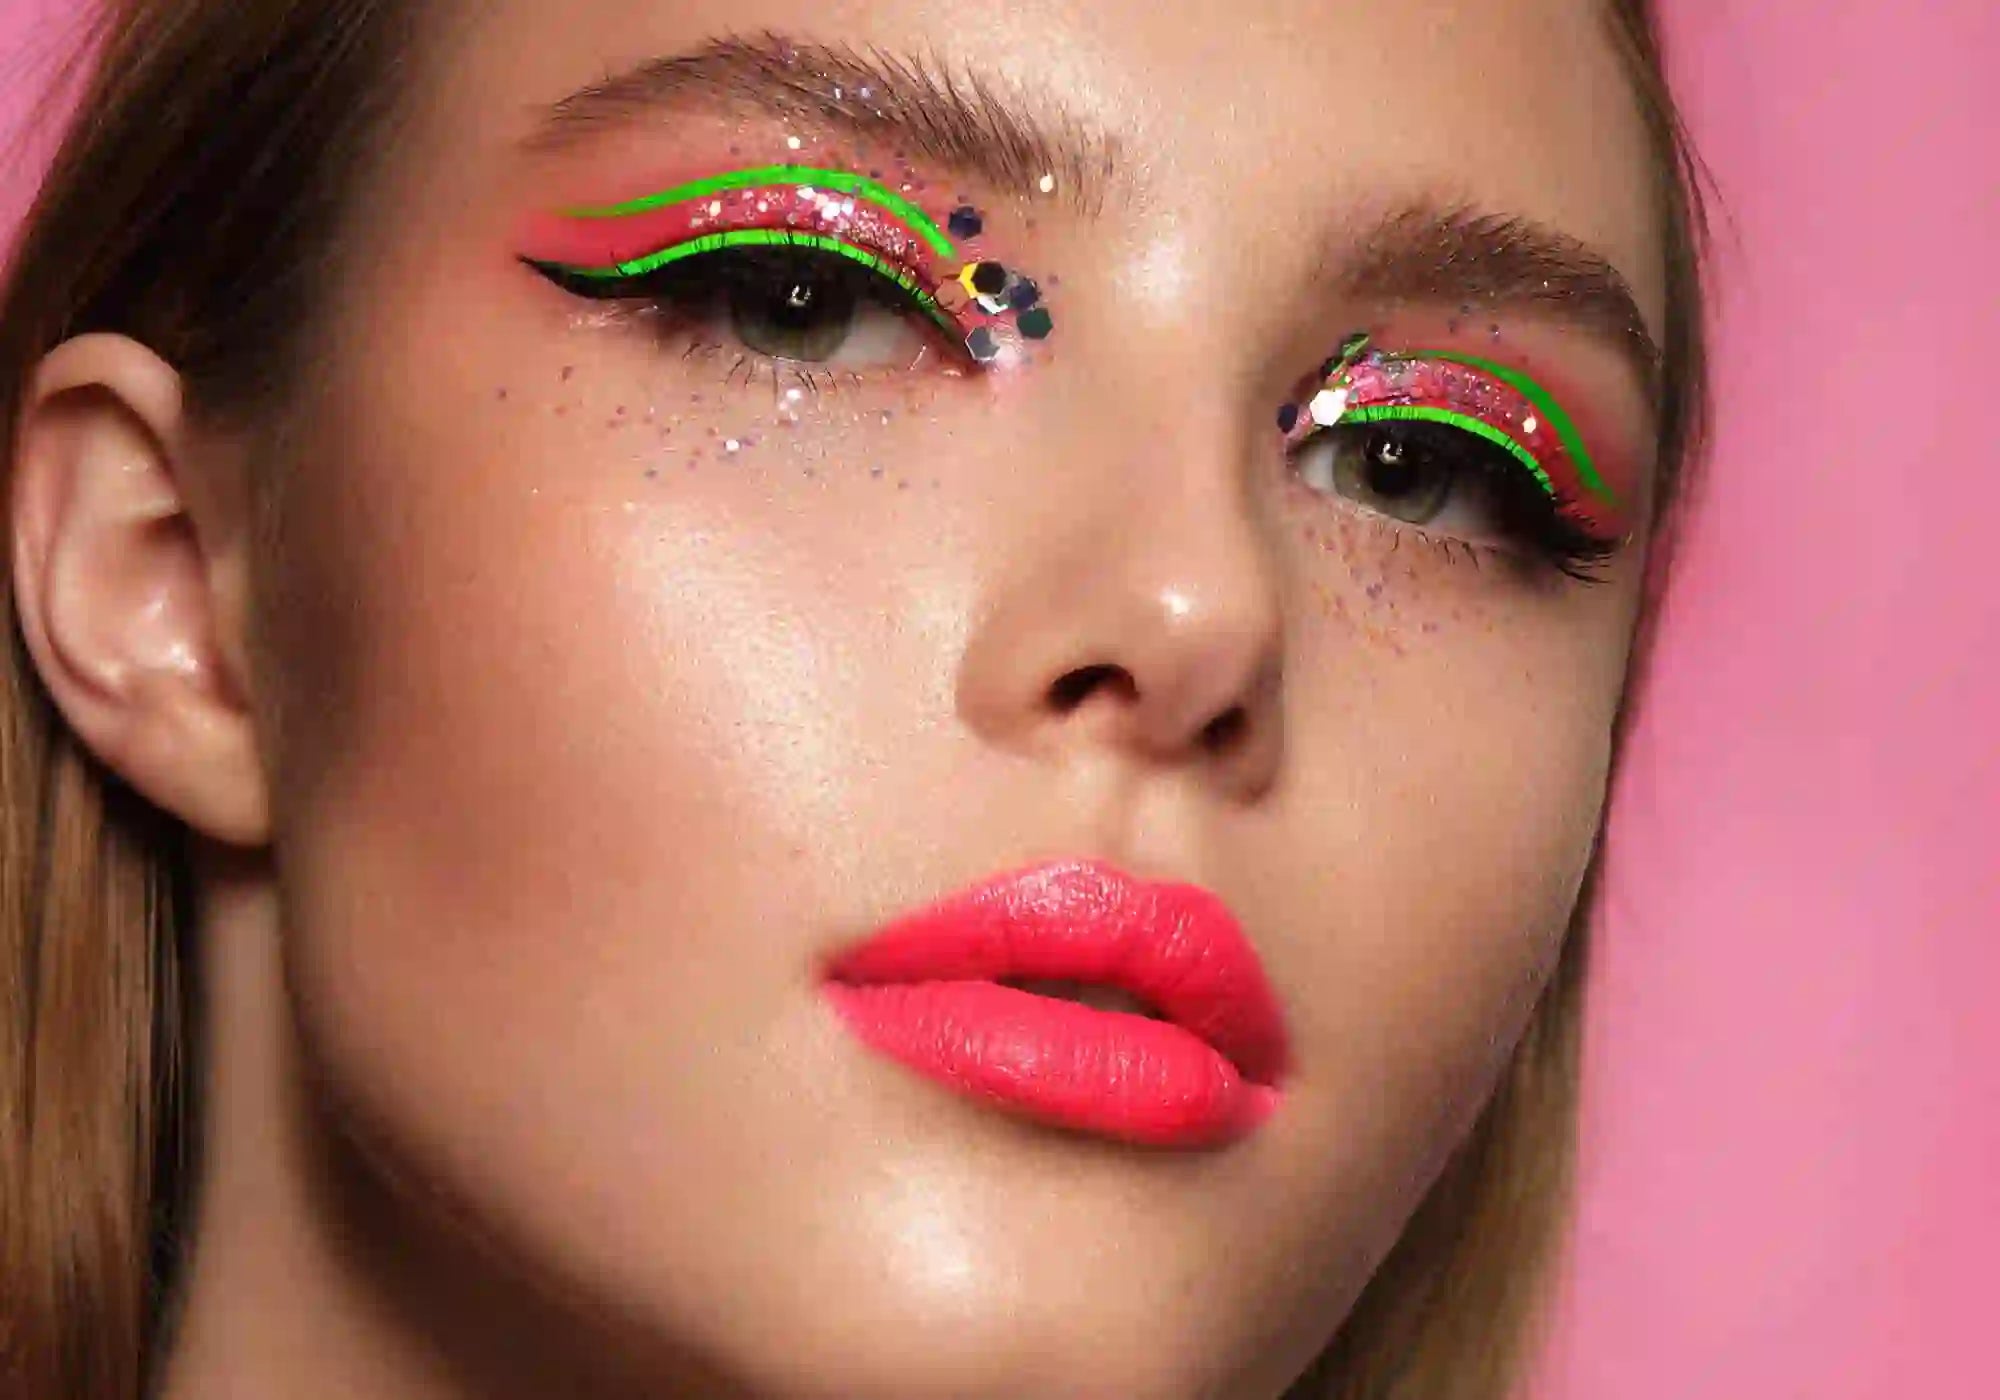 Stargazer neon makeup